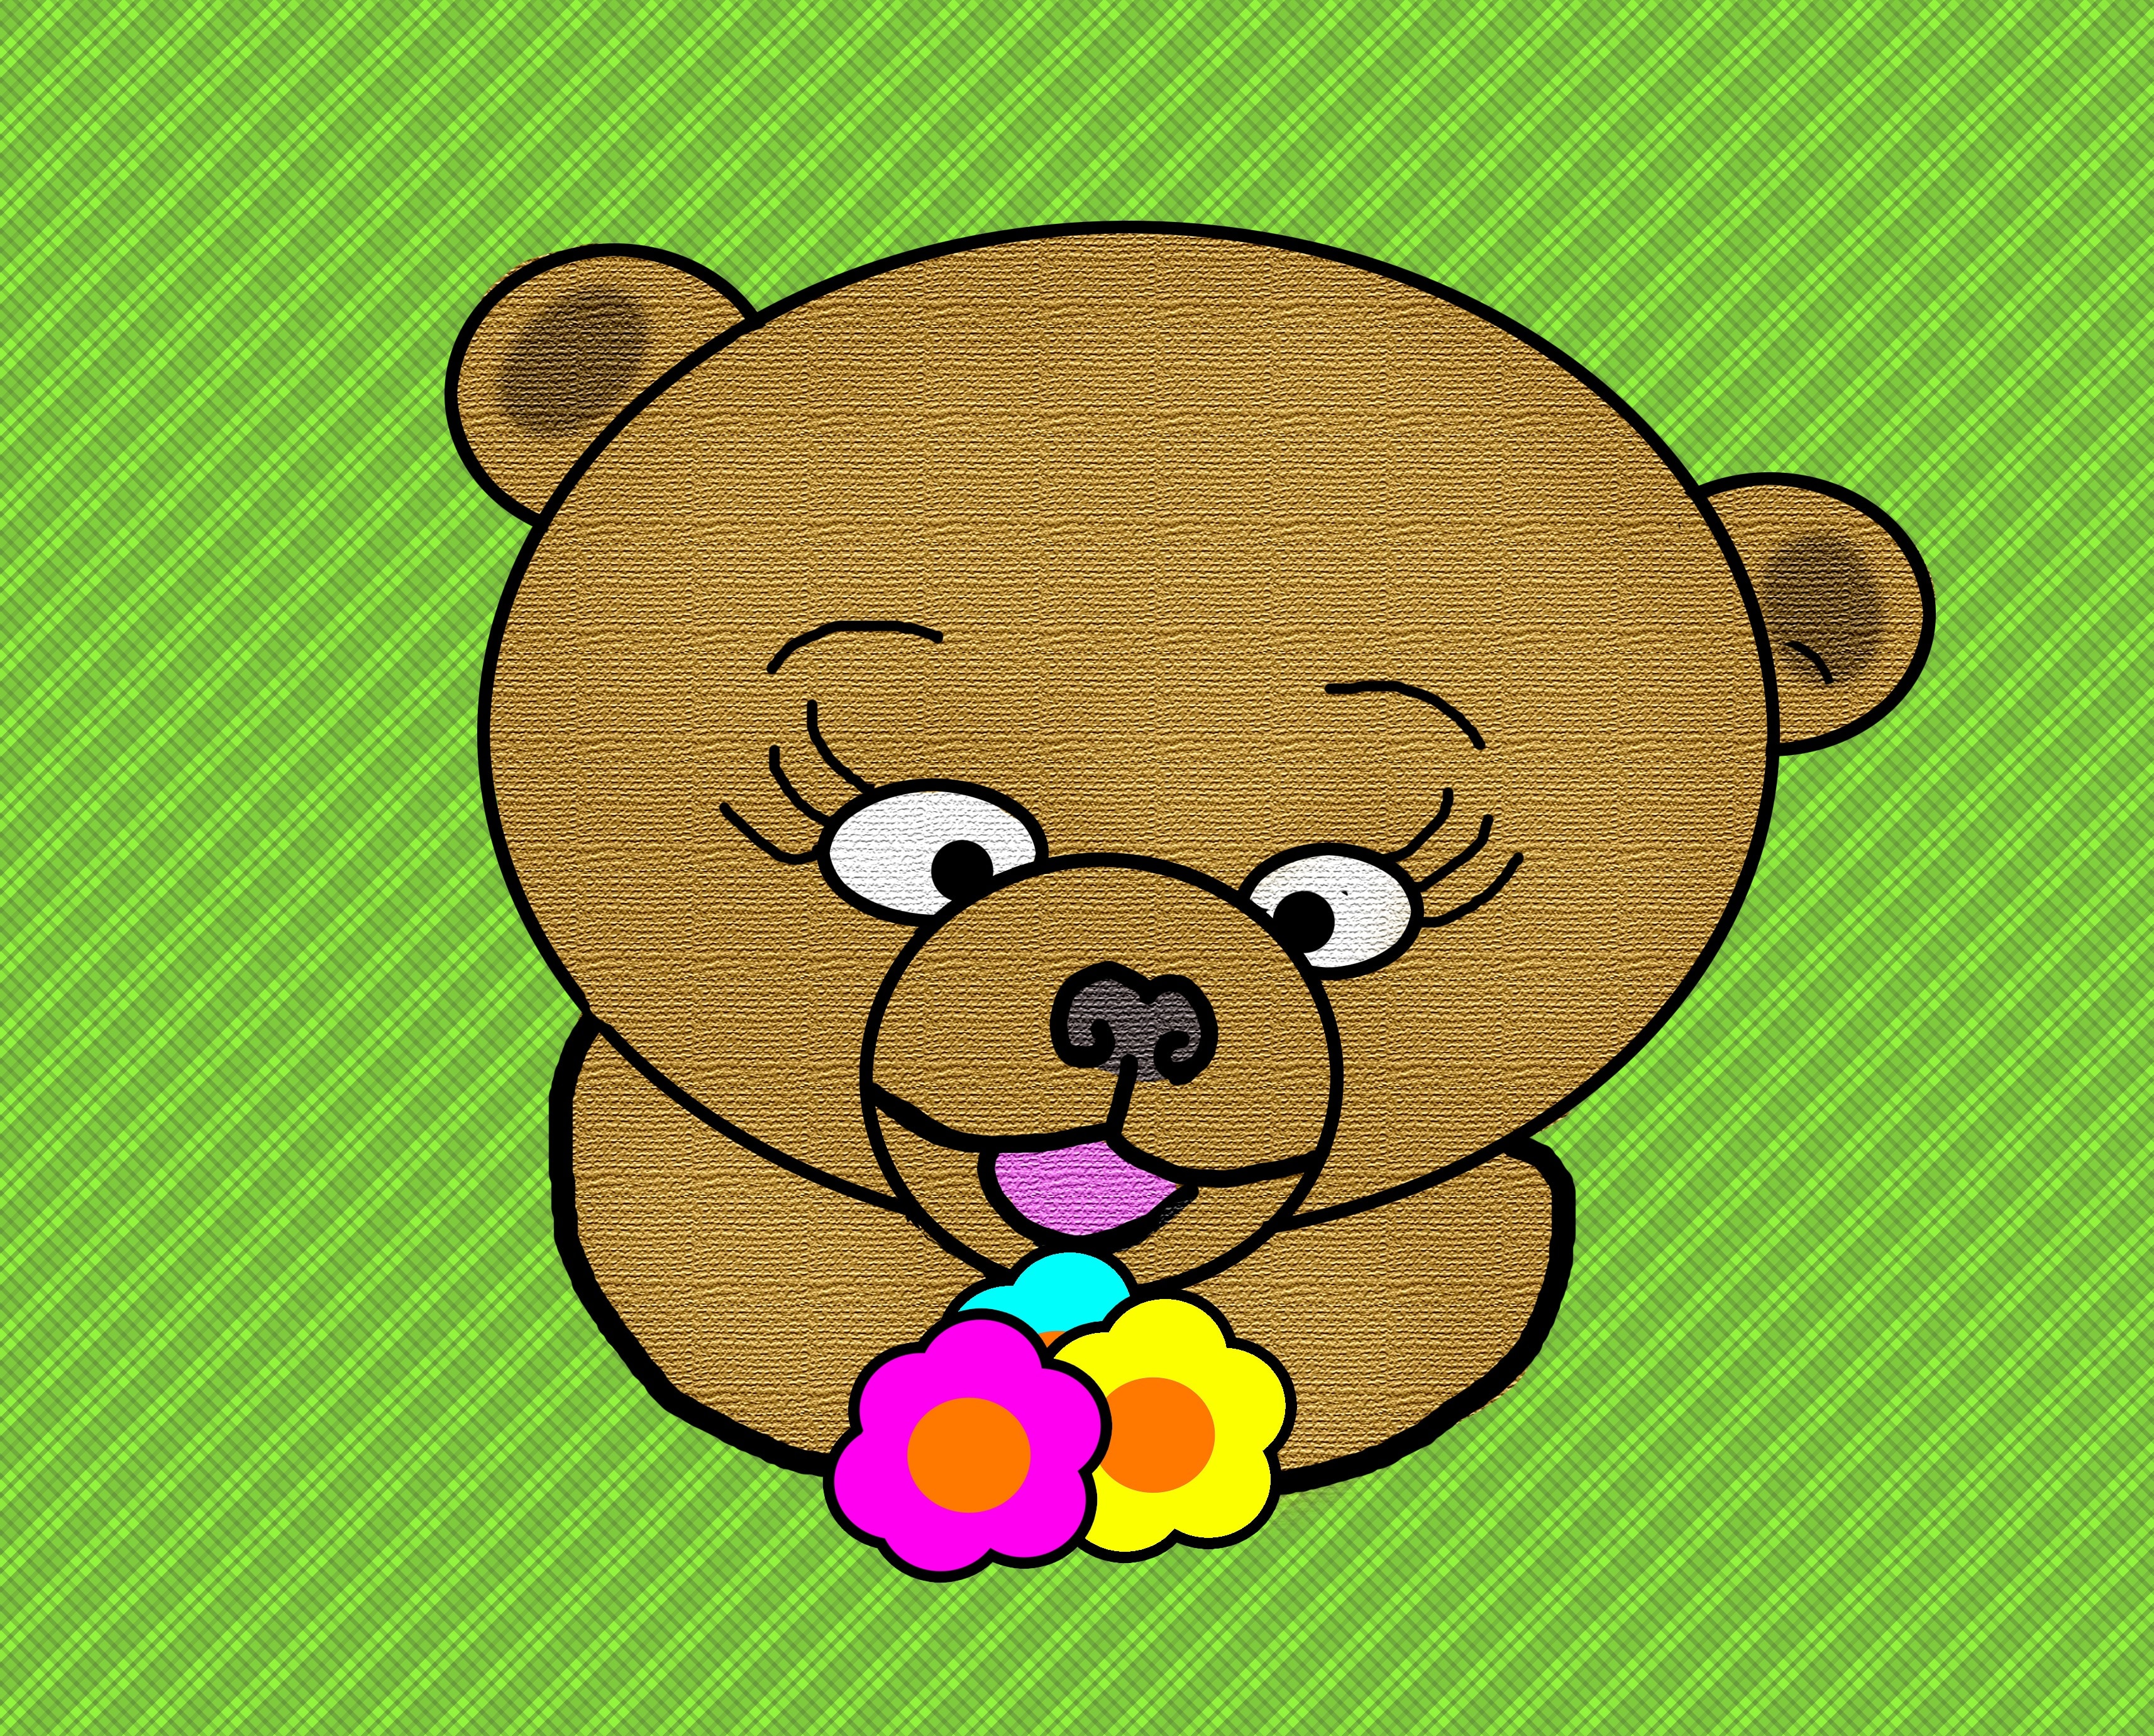 Teddy Bear, Teddybear, Green, Bear, green color, green background